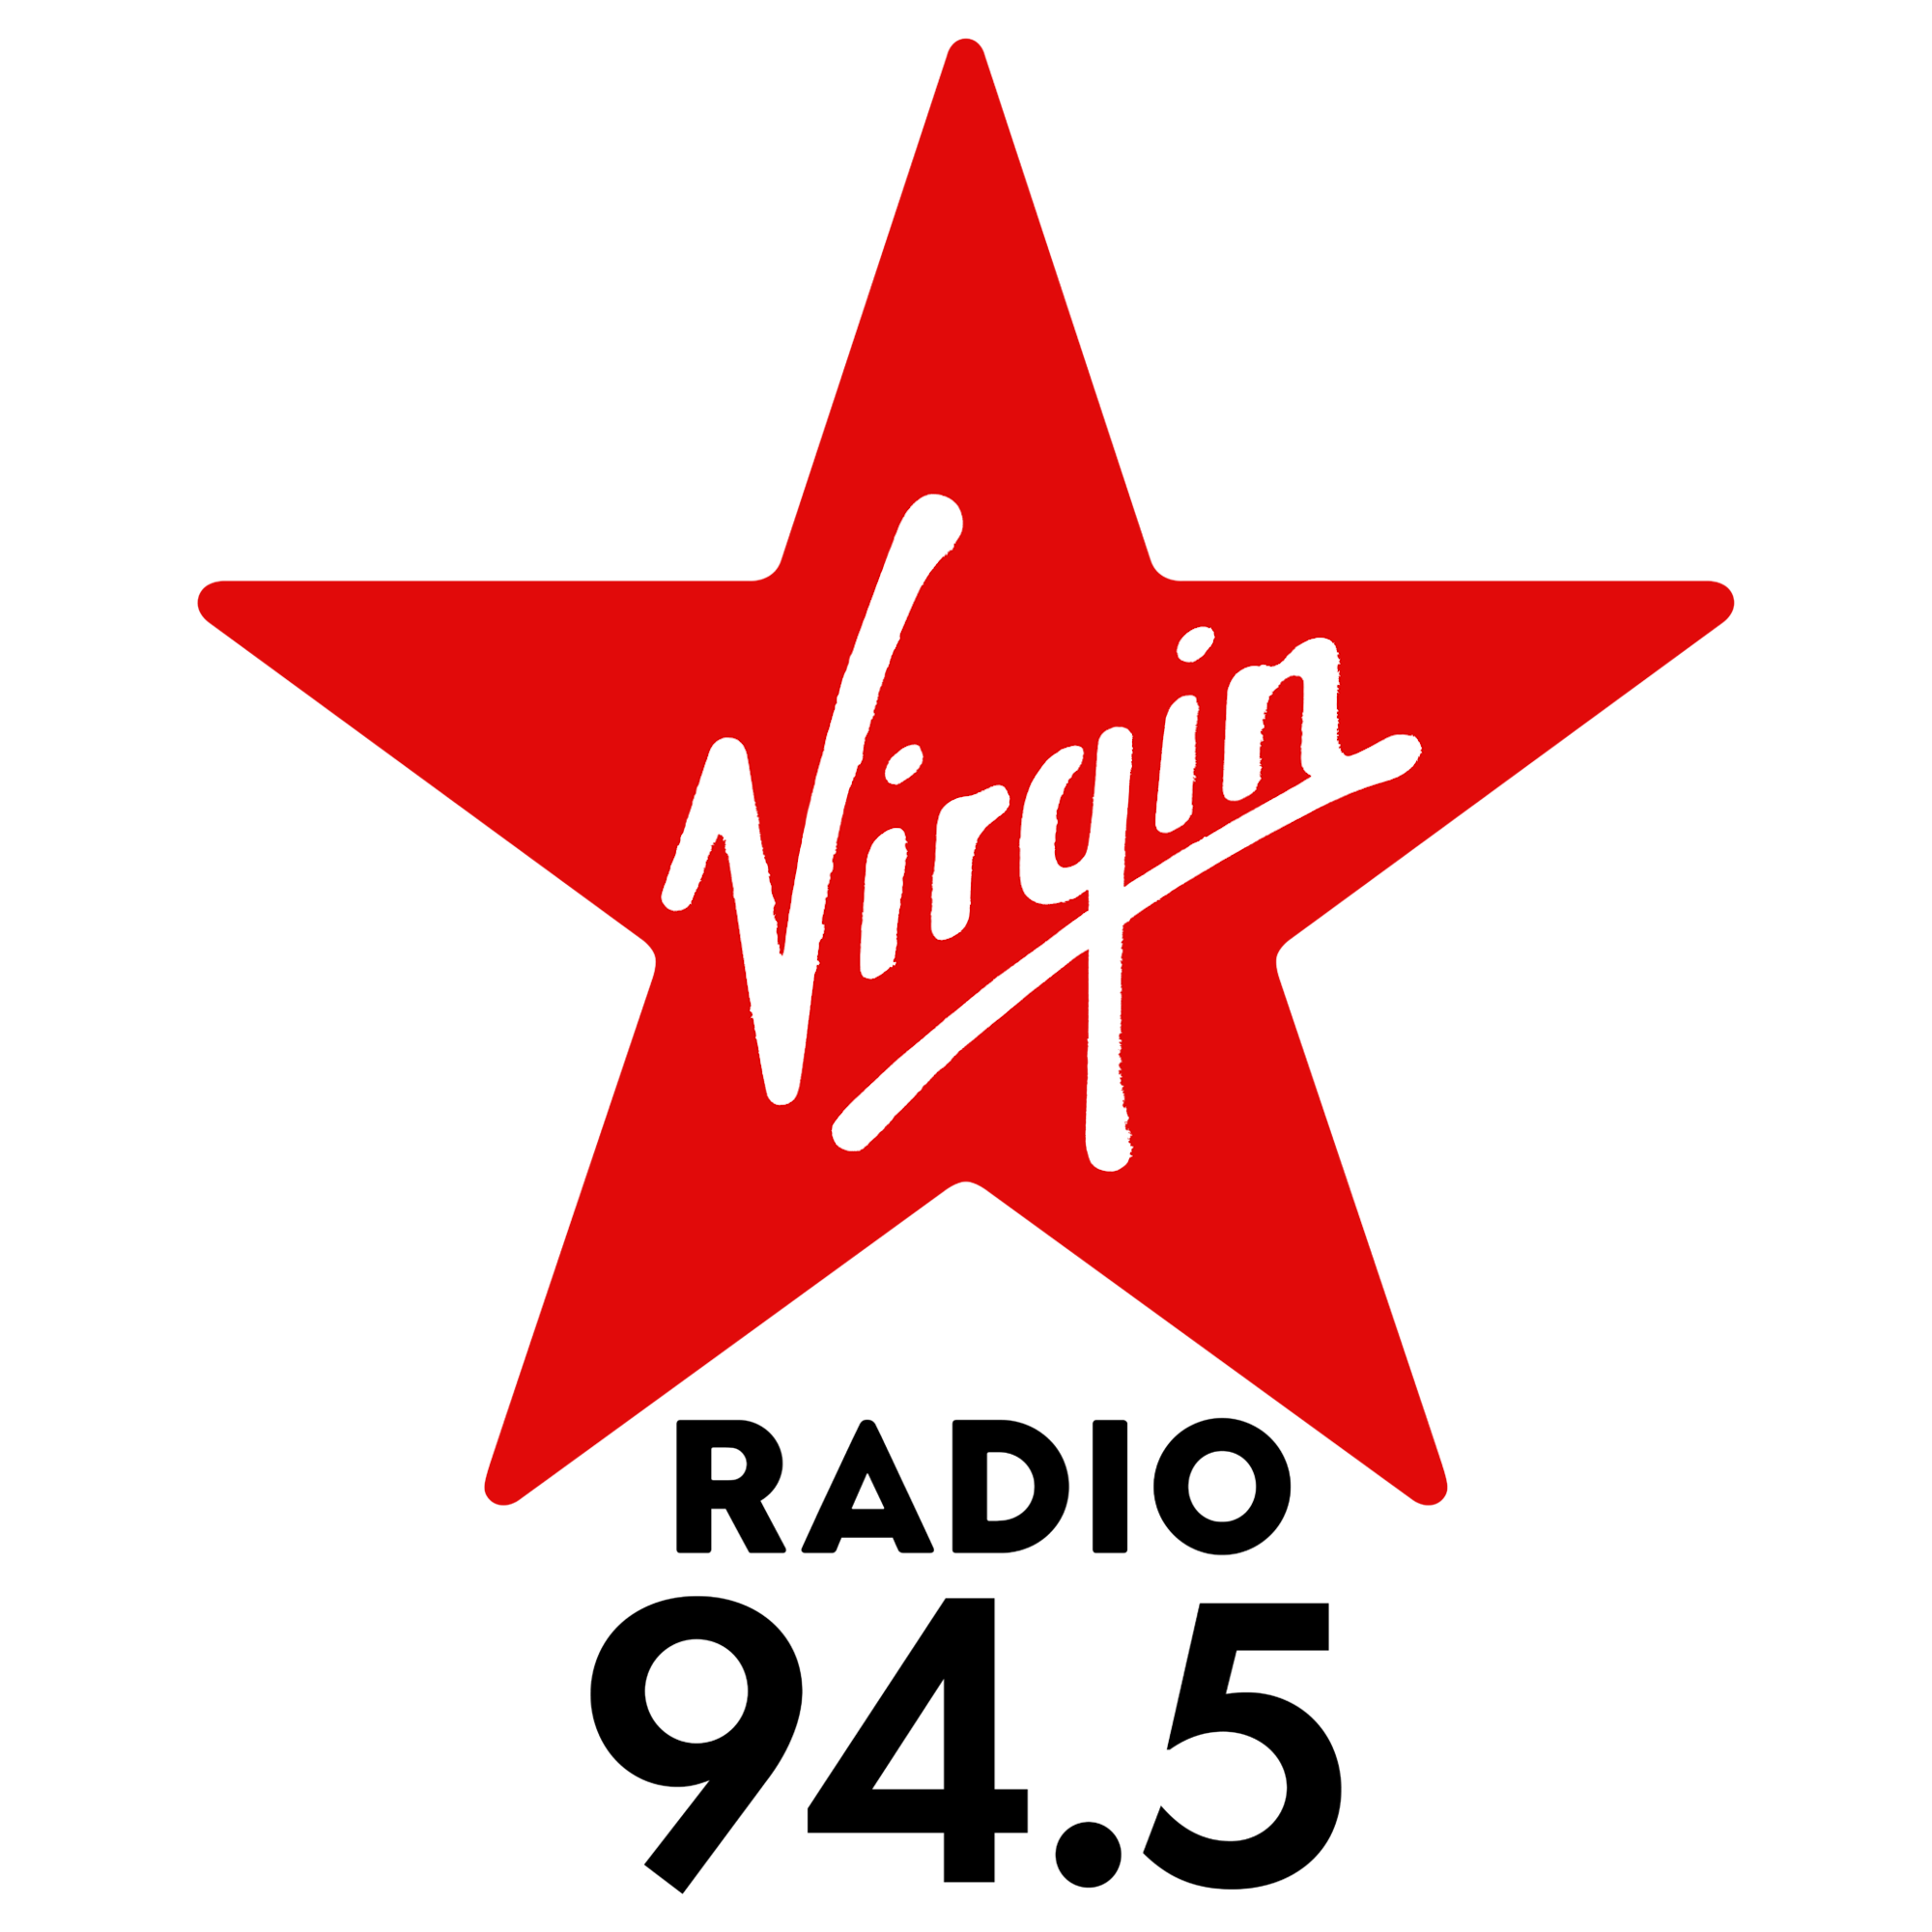 Virgin Radio 94.5 logo